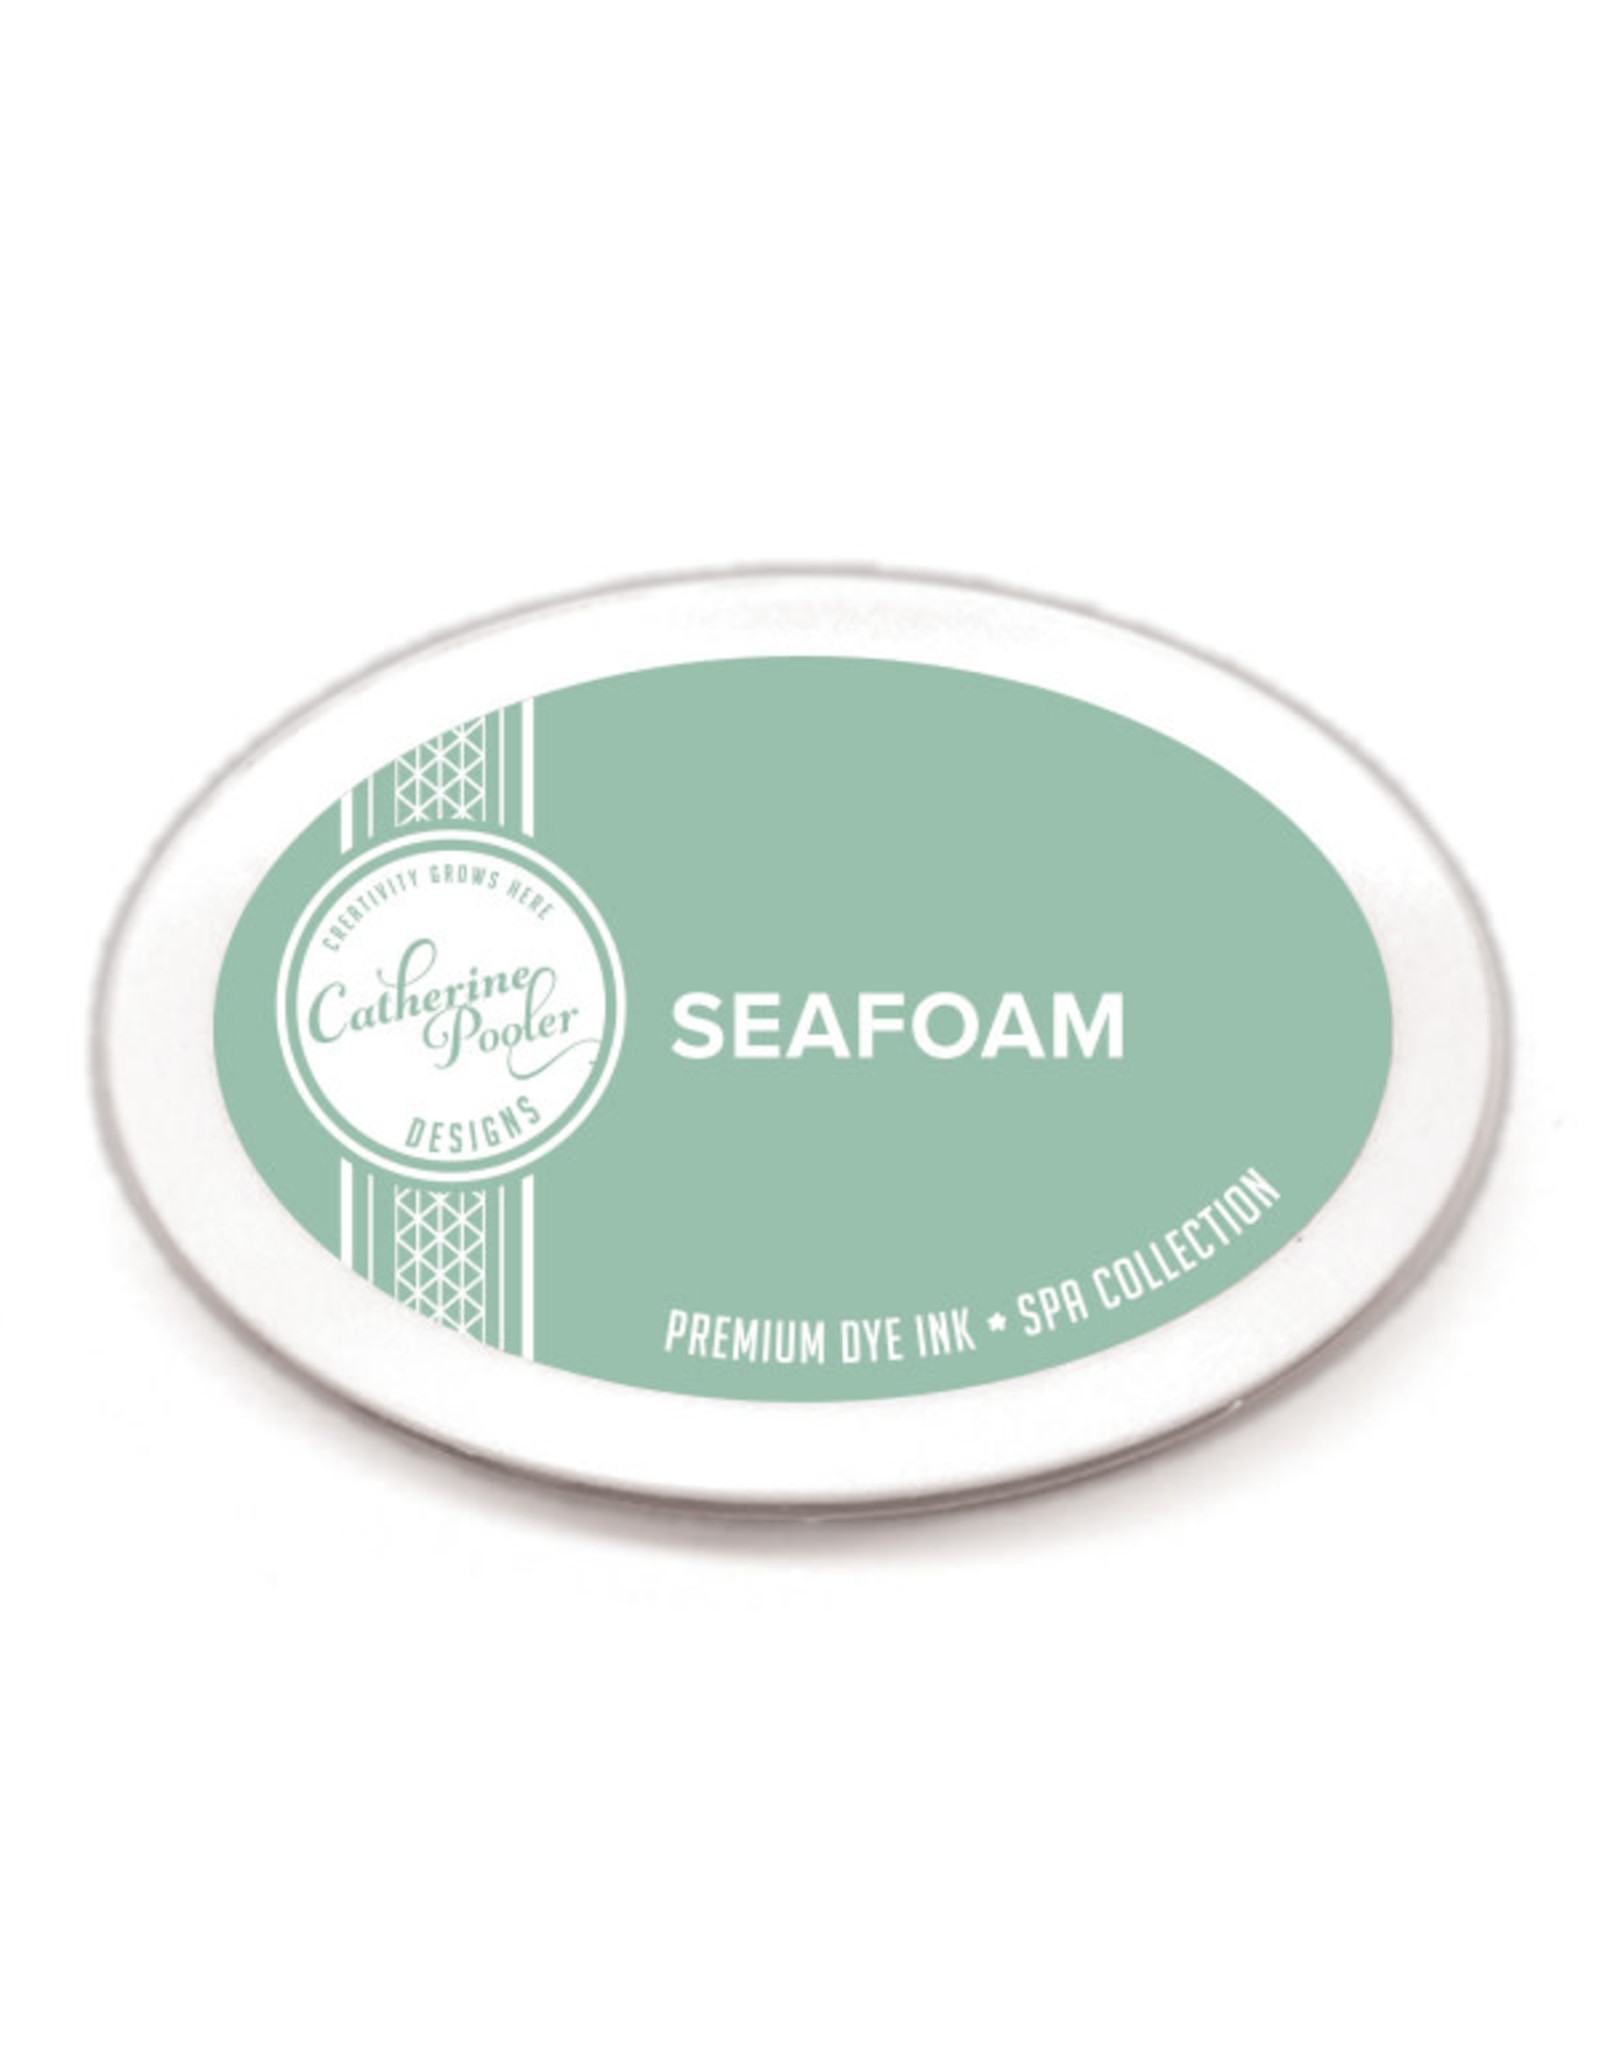 Catherine Pooler Designs Seafoam Ink Pad